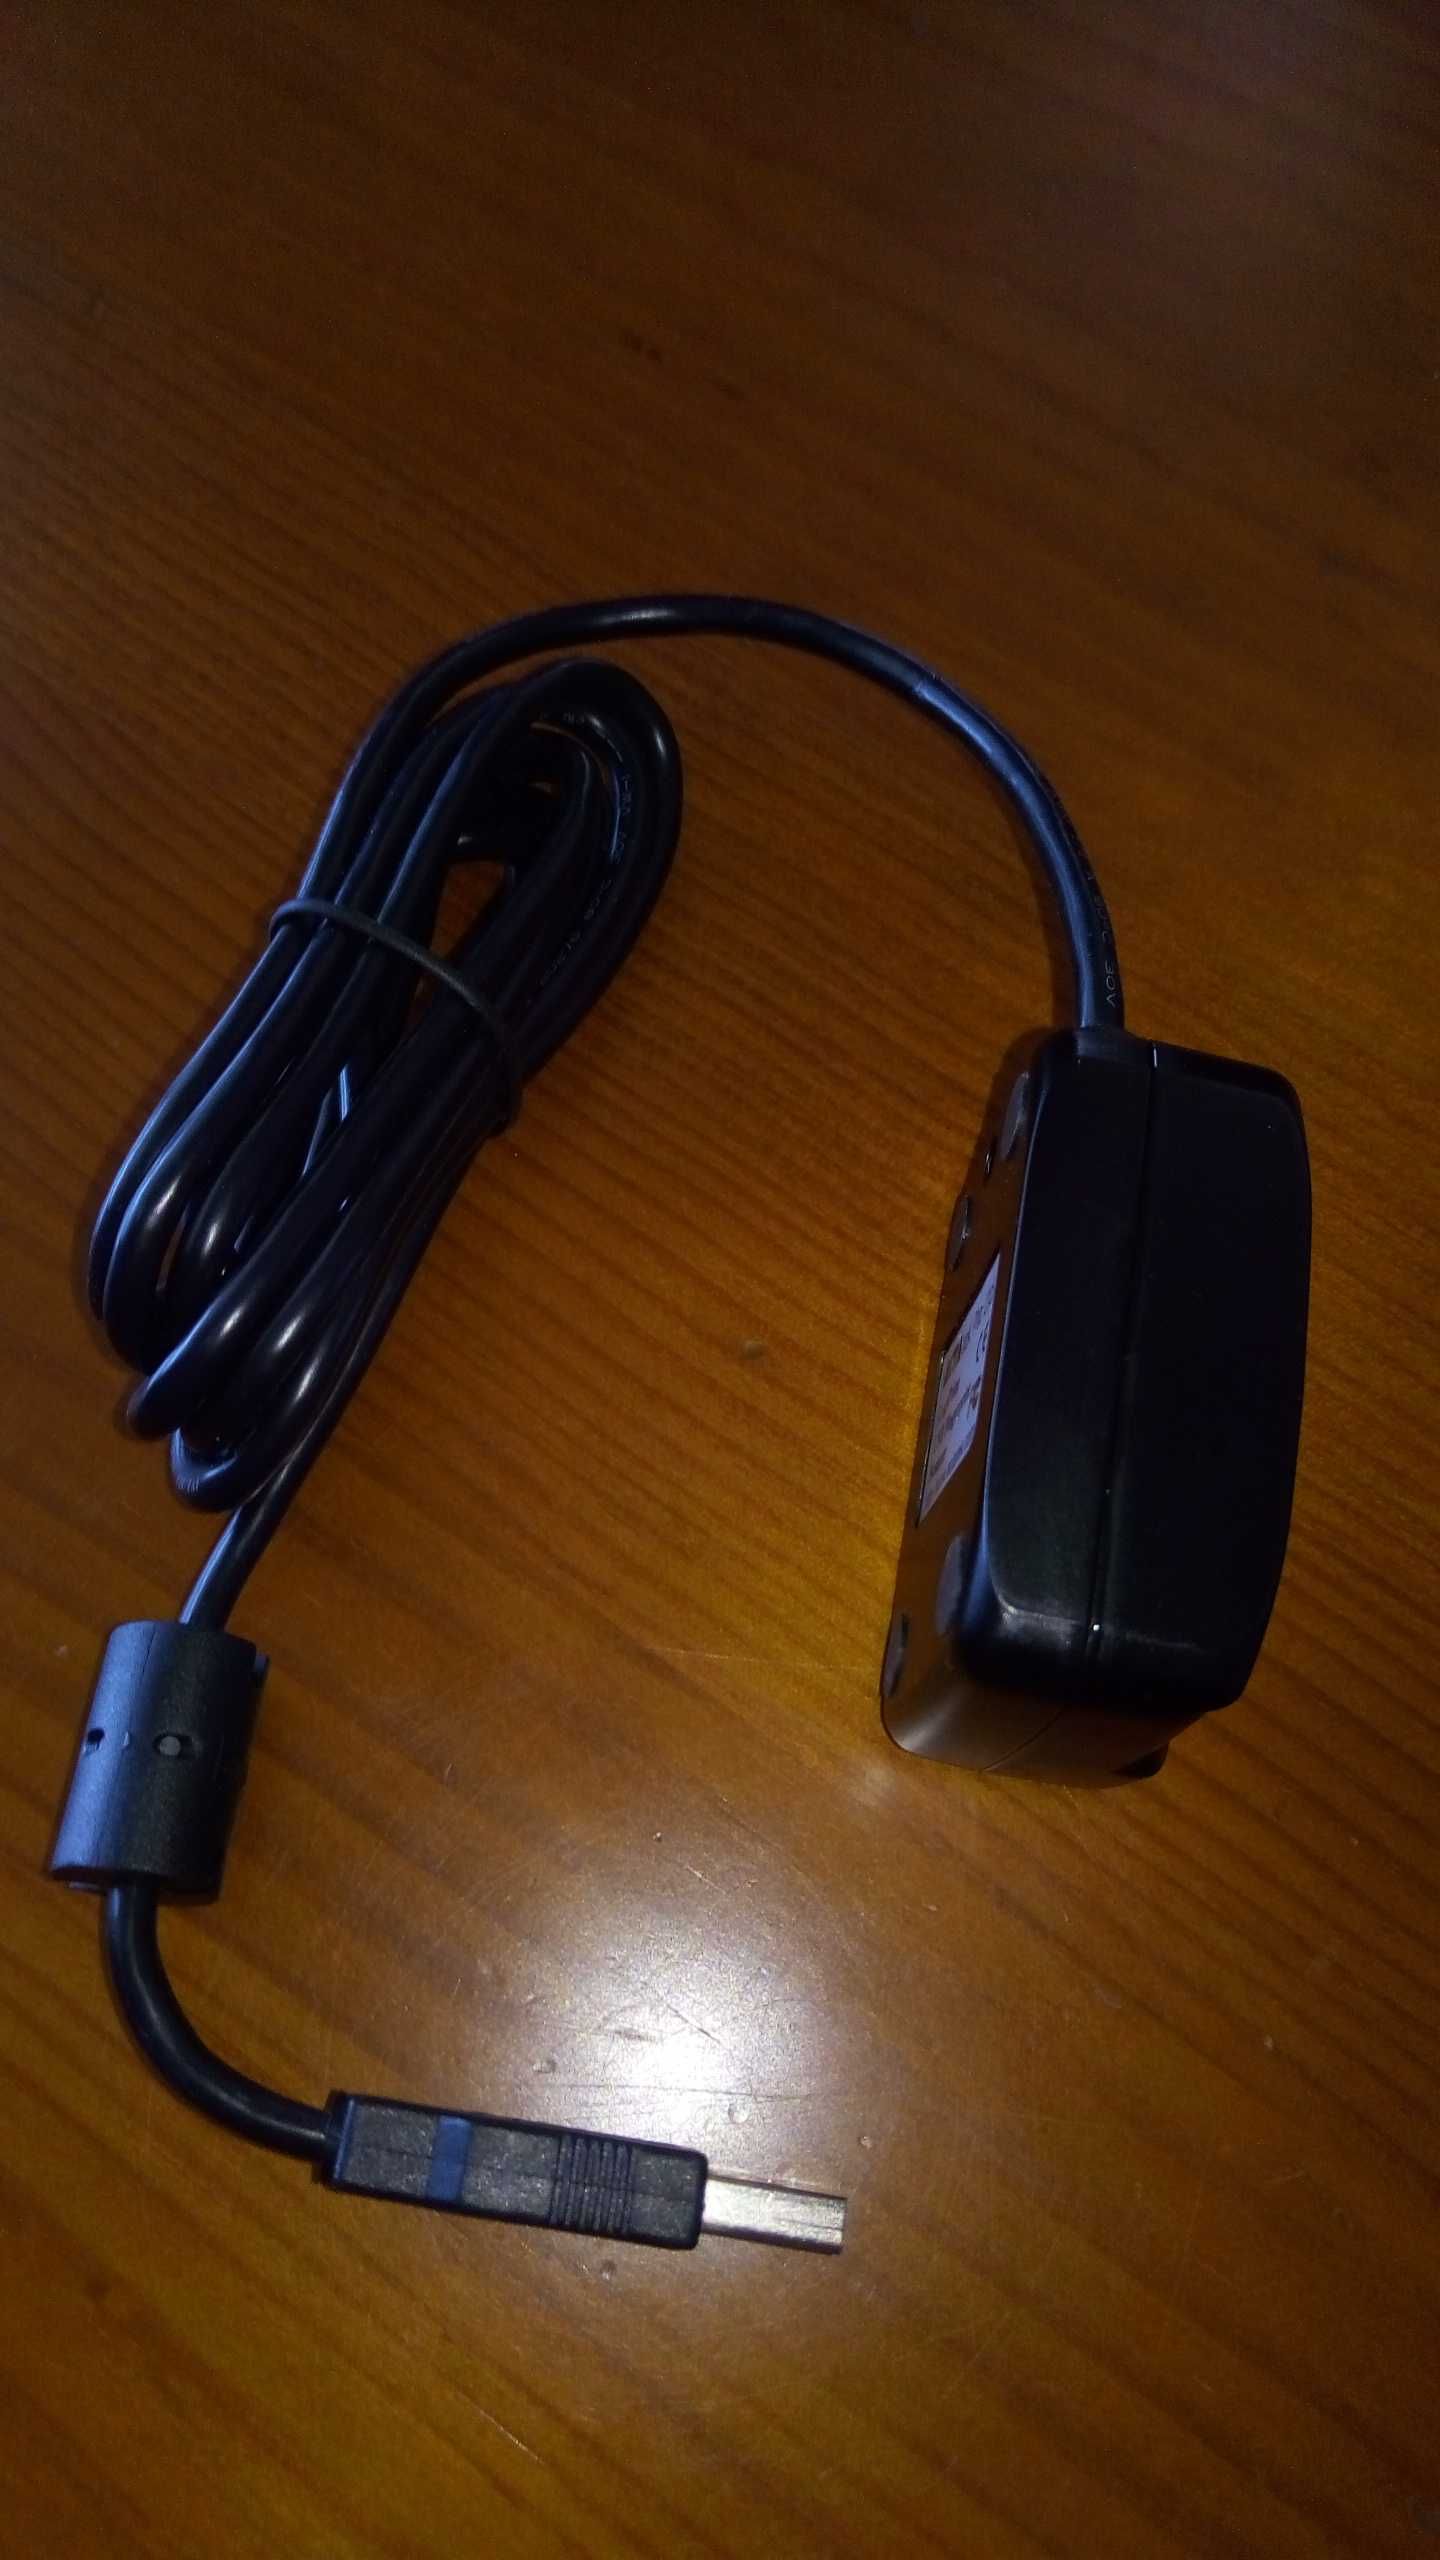 Leitor USB Isométrico (impressão digital)